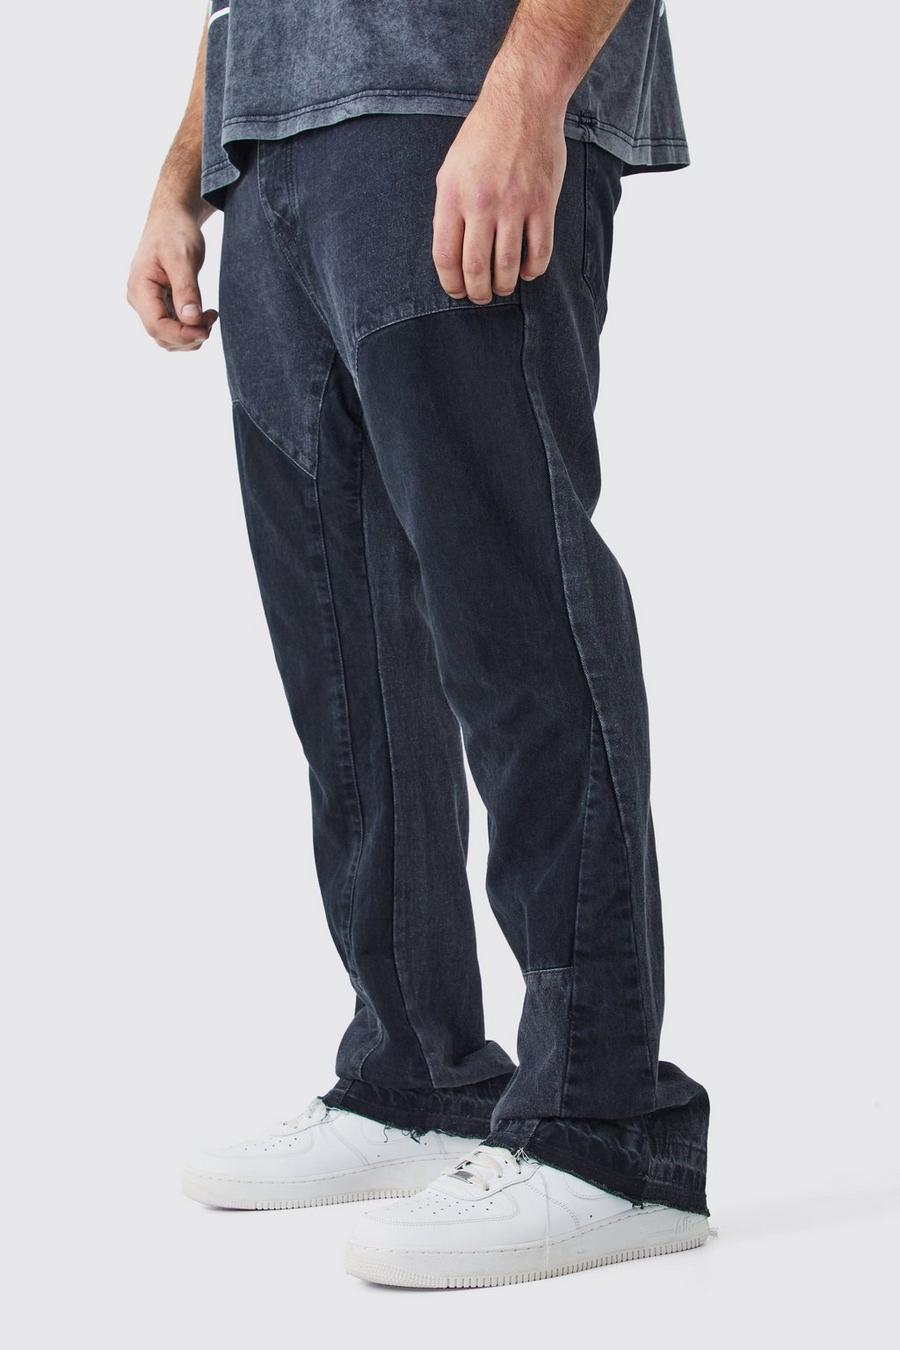 Jeans Plus Size Slim Fit in denim rigido sovratinto stile Carpenter, Charcoal